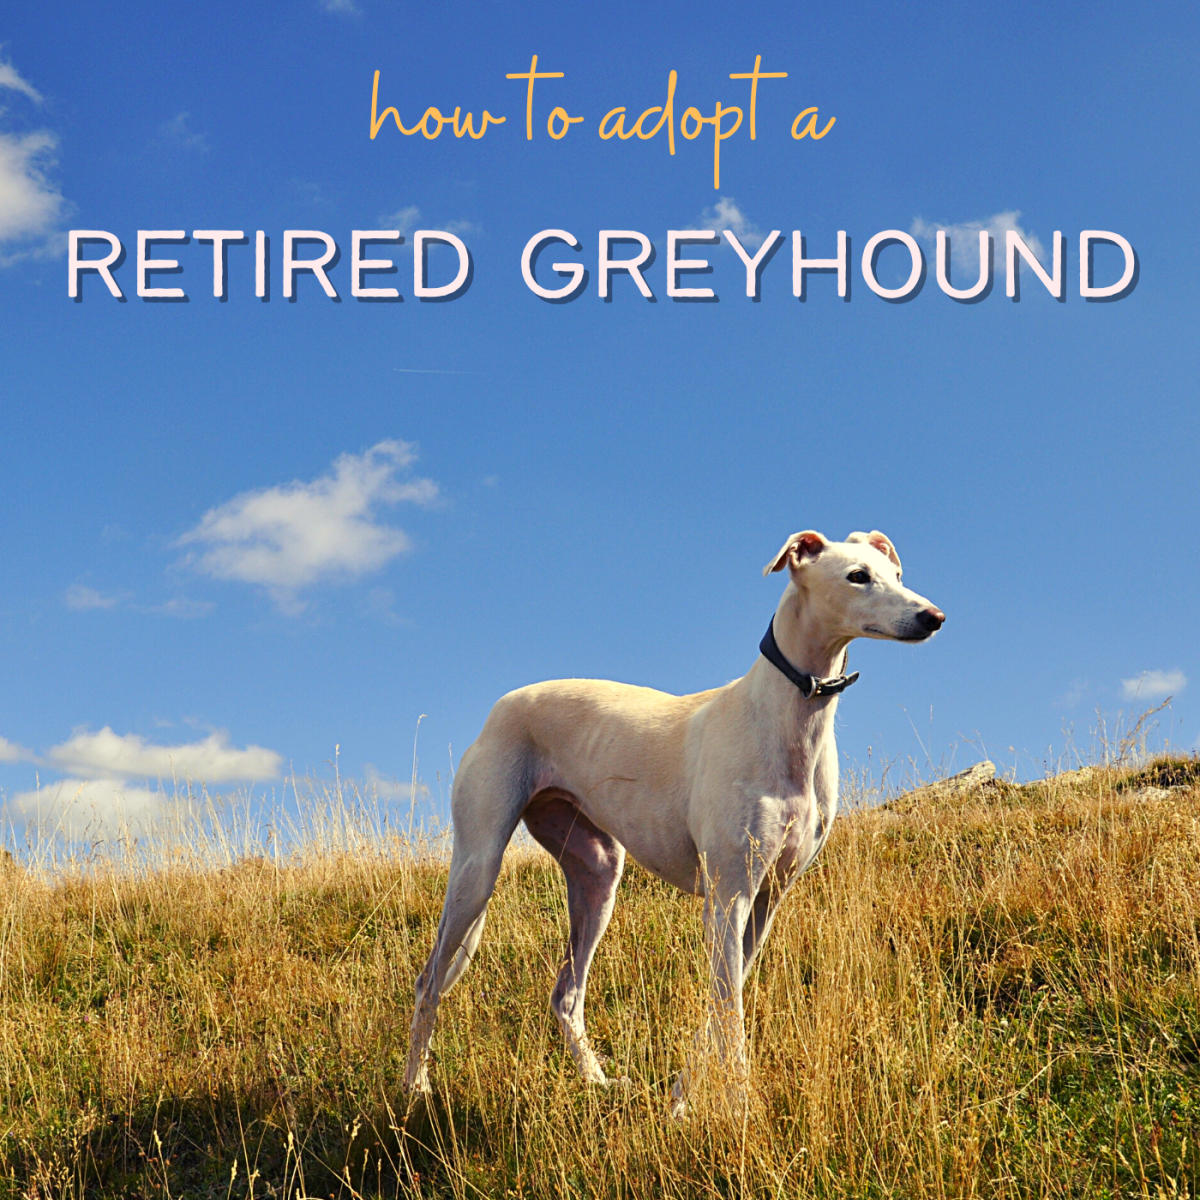 Tips on adopting retired racing greyhound dogs.